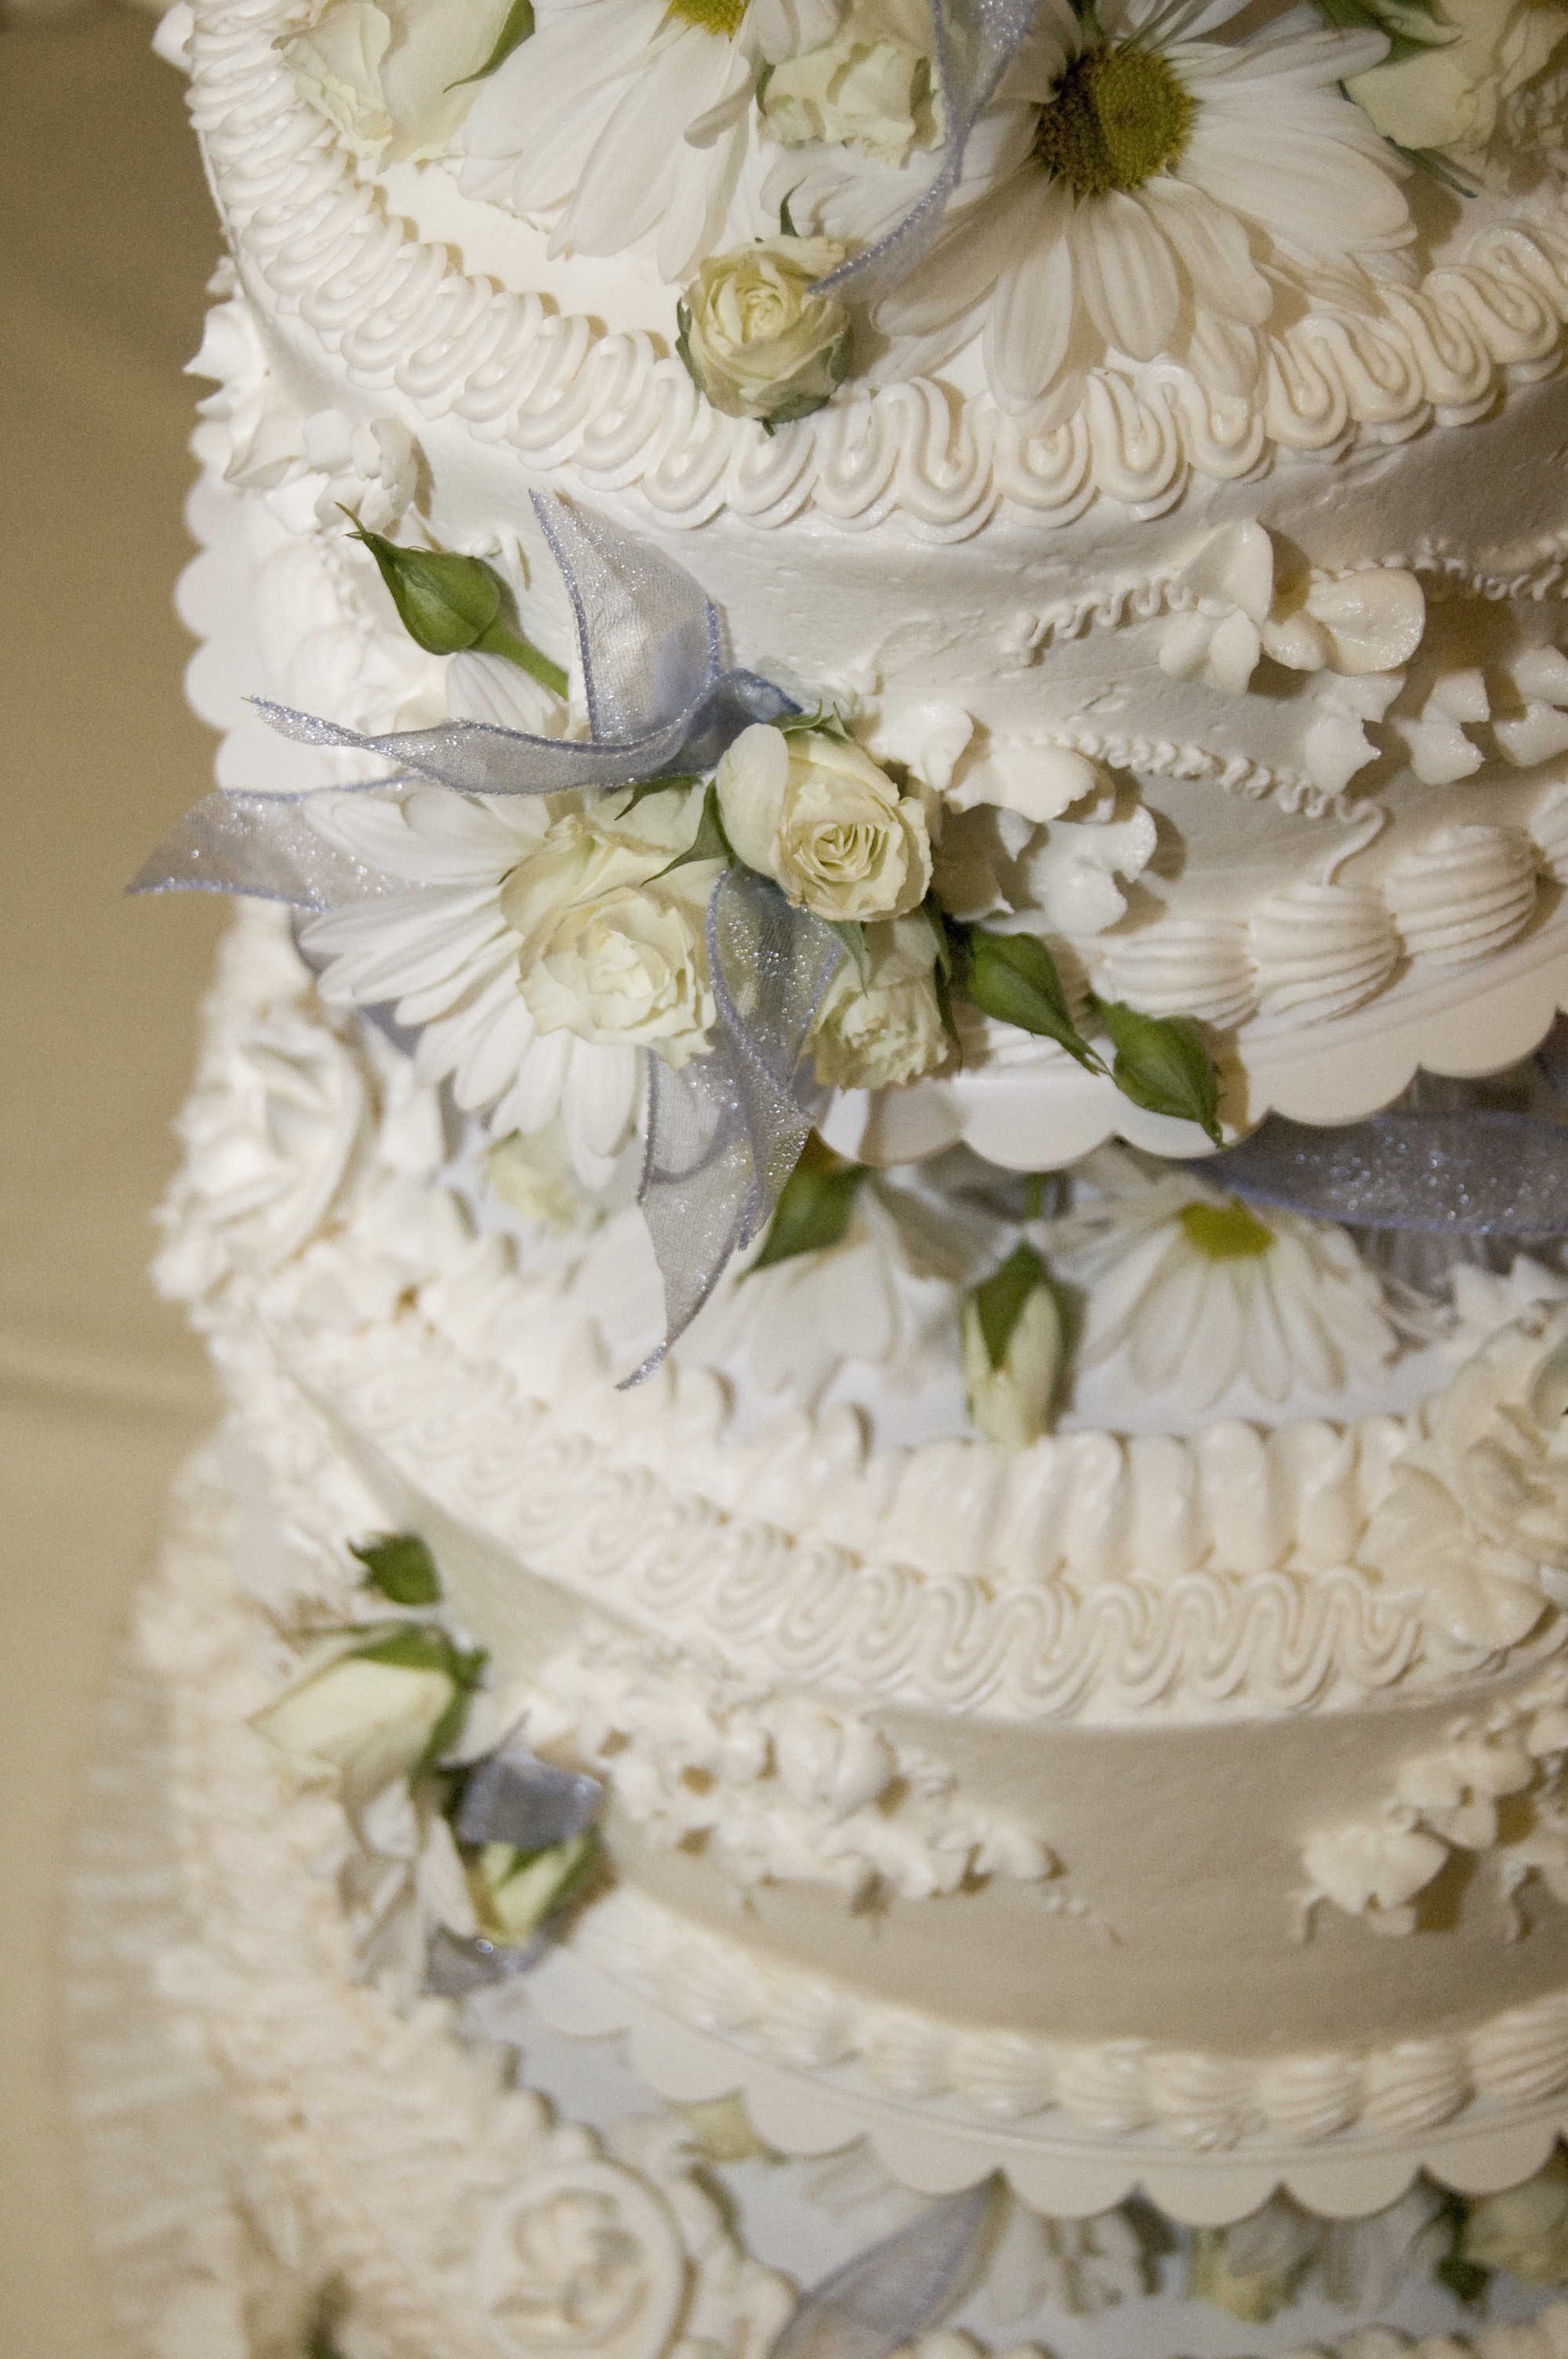 Wedding Cakes Decor
 Instructions Decorating A Wedding Cake – Wedding Cake